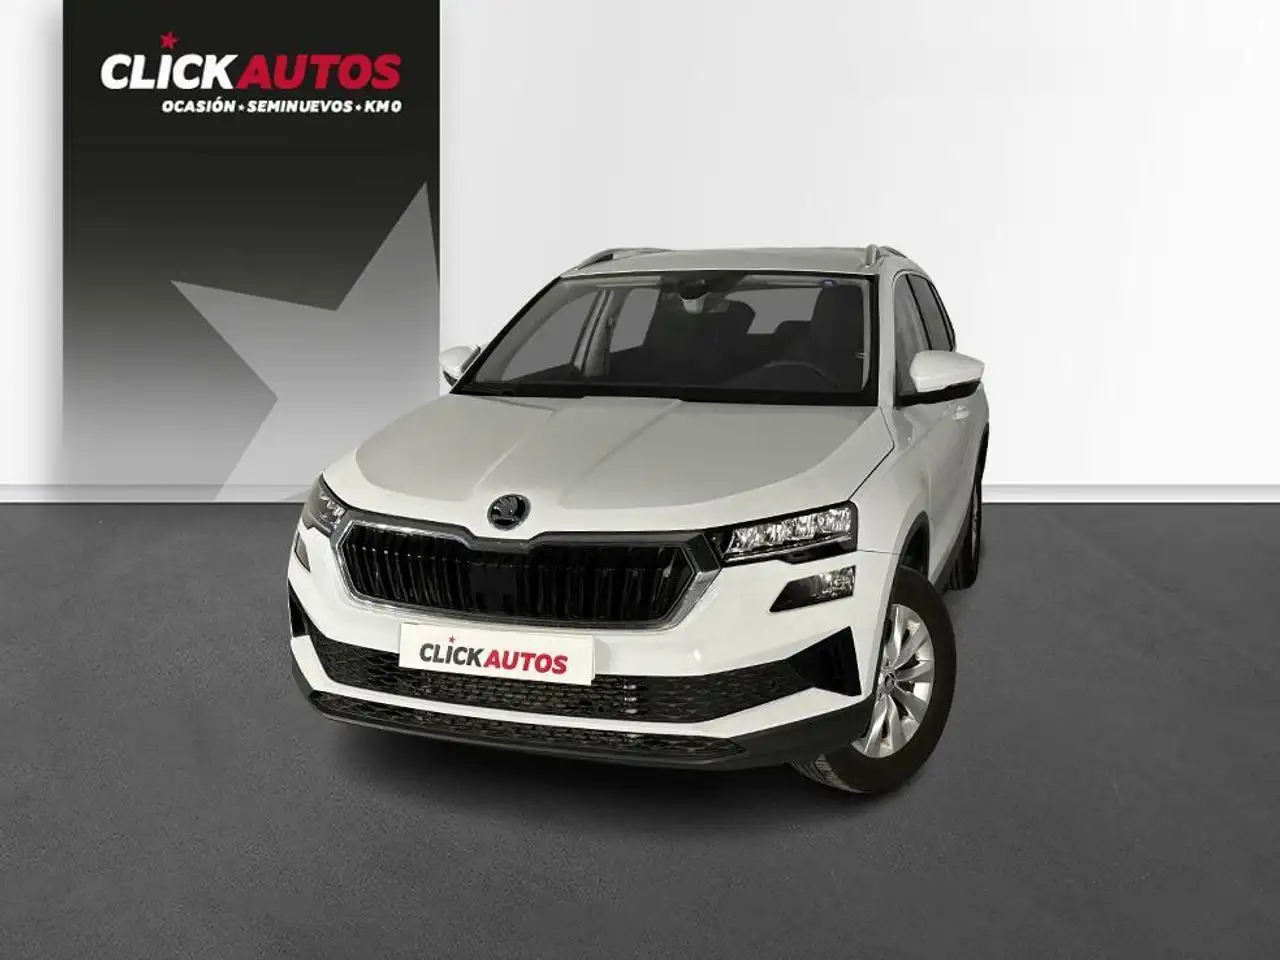 Skoda Karoq SUV/4x4/Pick-up in Wit tweedehands in MADRID voor € 22.450,-